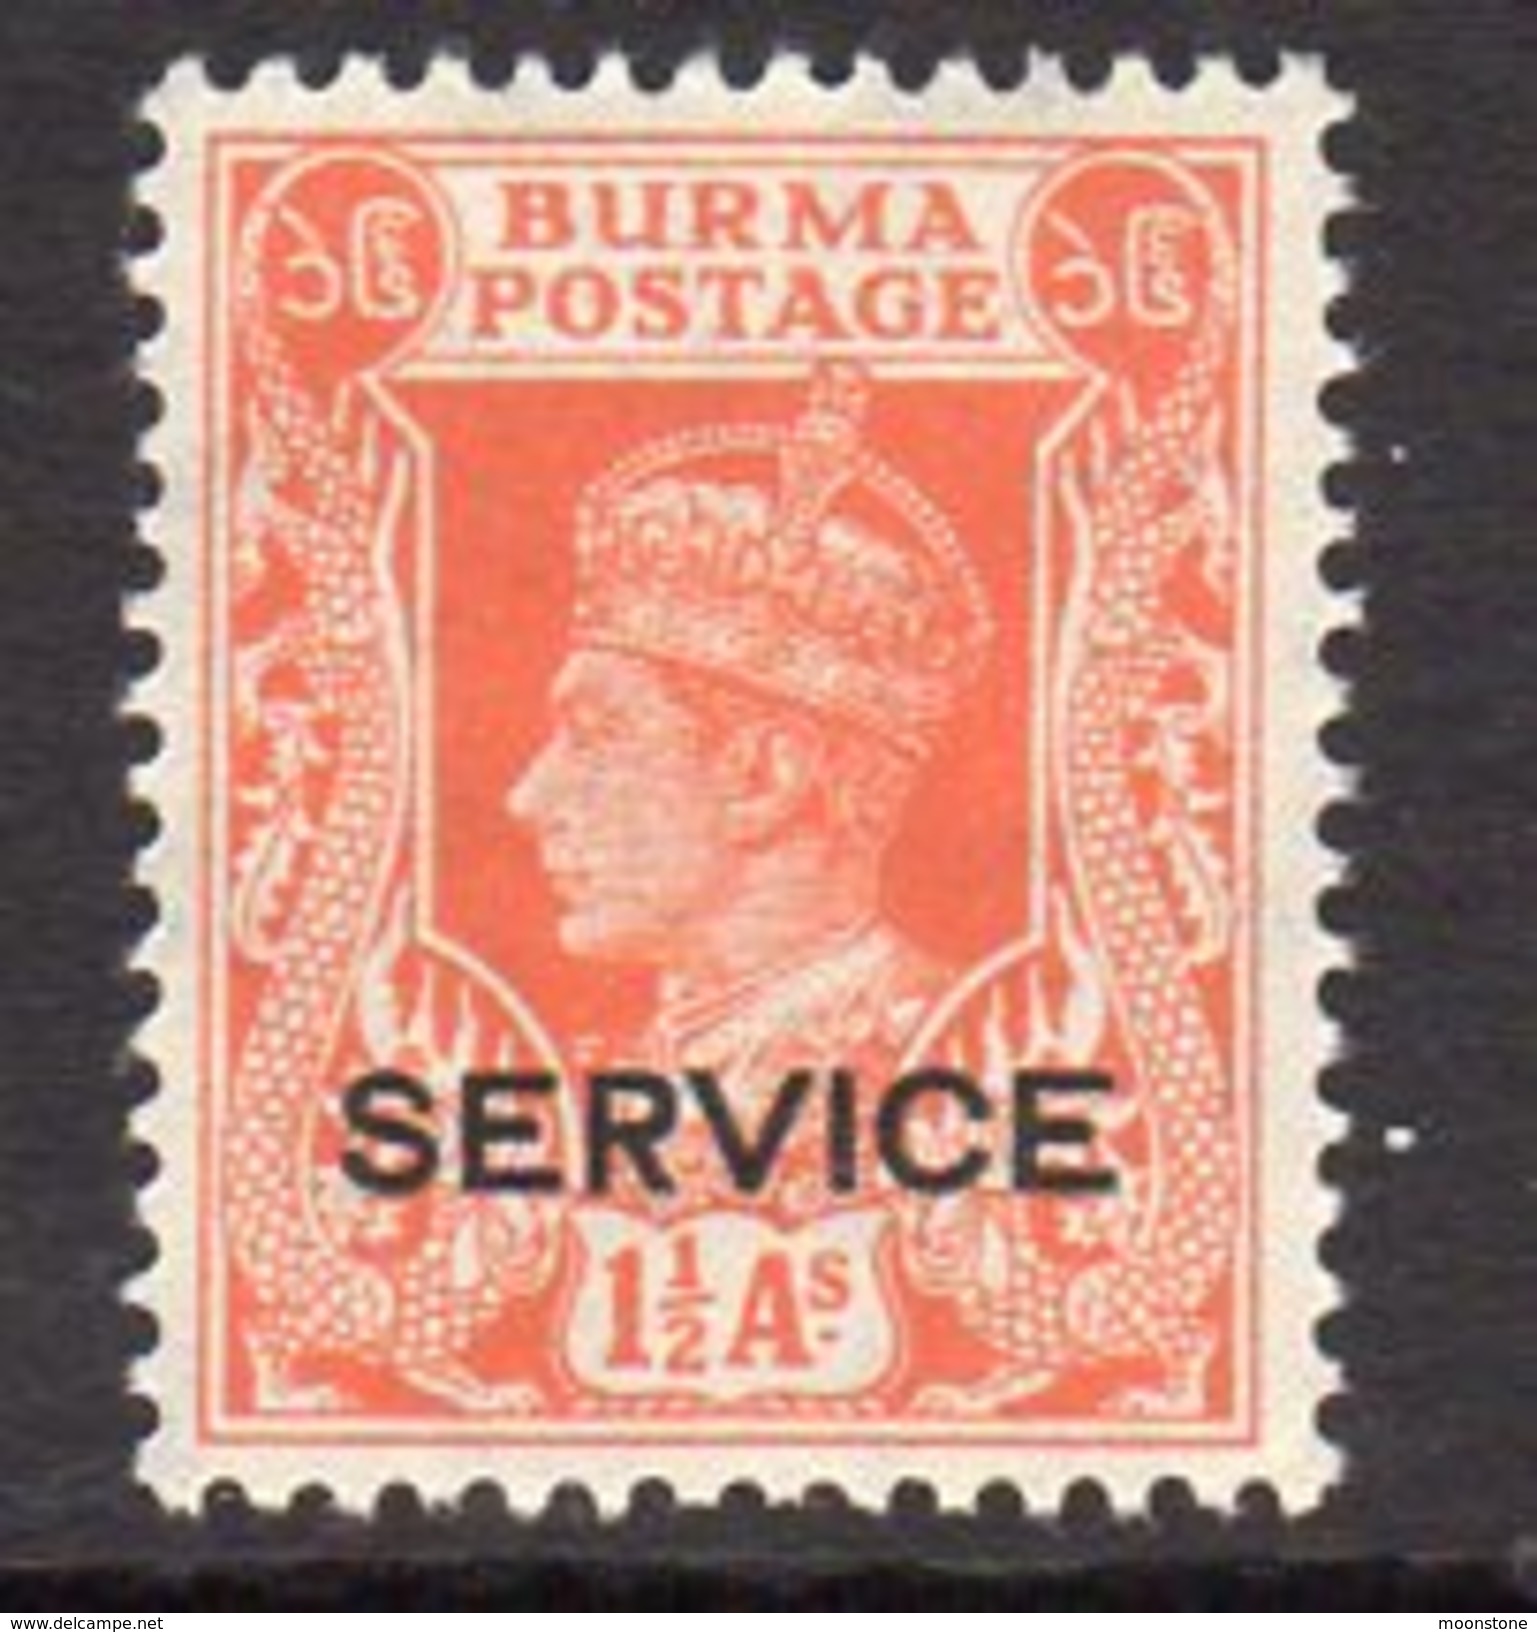 Burma GVI 1946 Civil Administration SERVICE 1½a. Value, Very Lightly Hinged Mint, SG O32 (D) - Burma (...-1947)